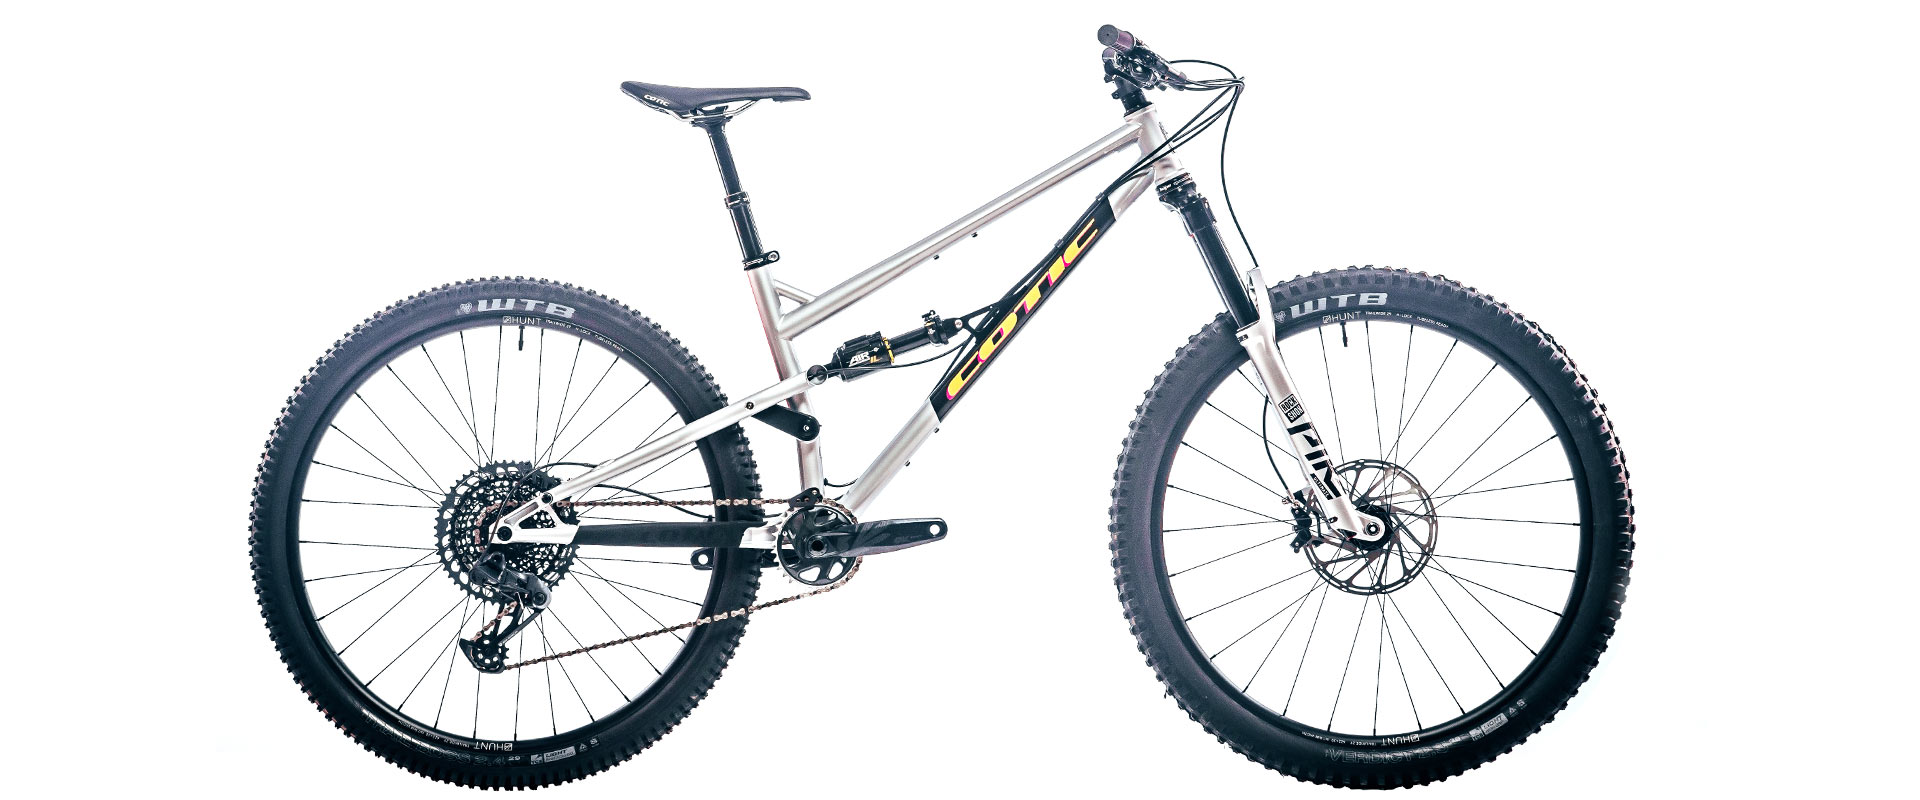 cotic jeht, 140mm trail bike, review, reynolds 853, steel full suspension, 29er trail bike, uk made, uk made mountain bike